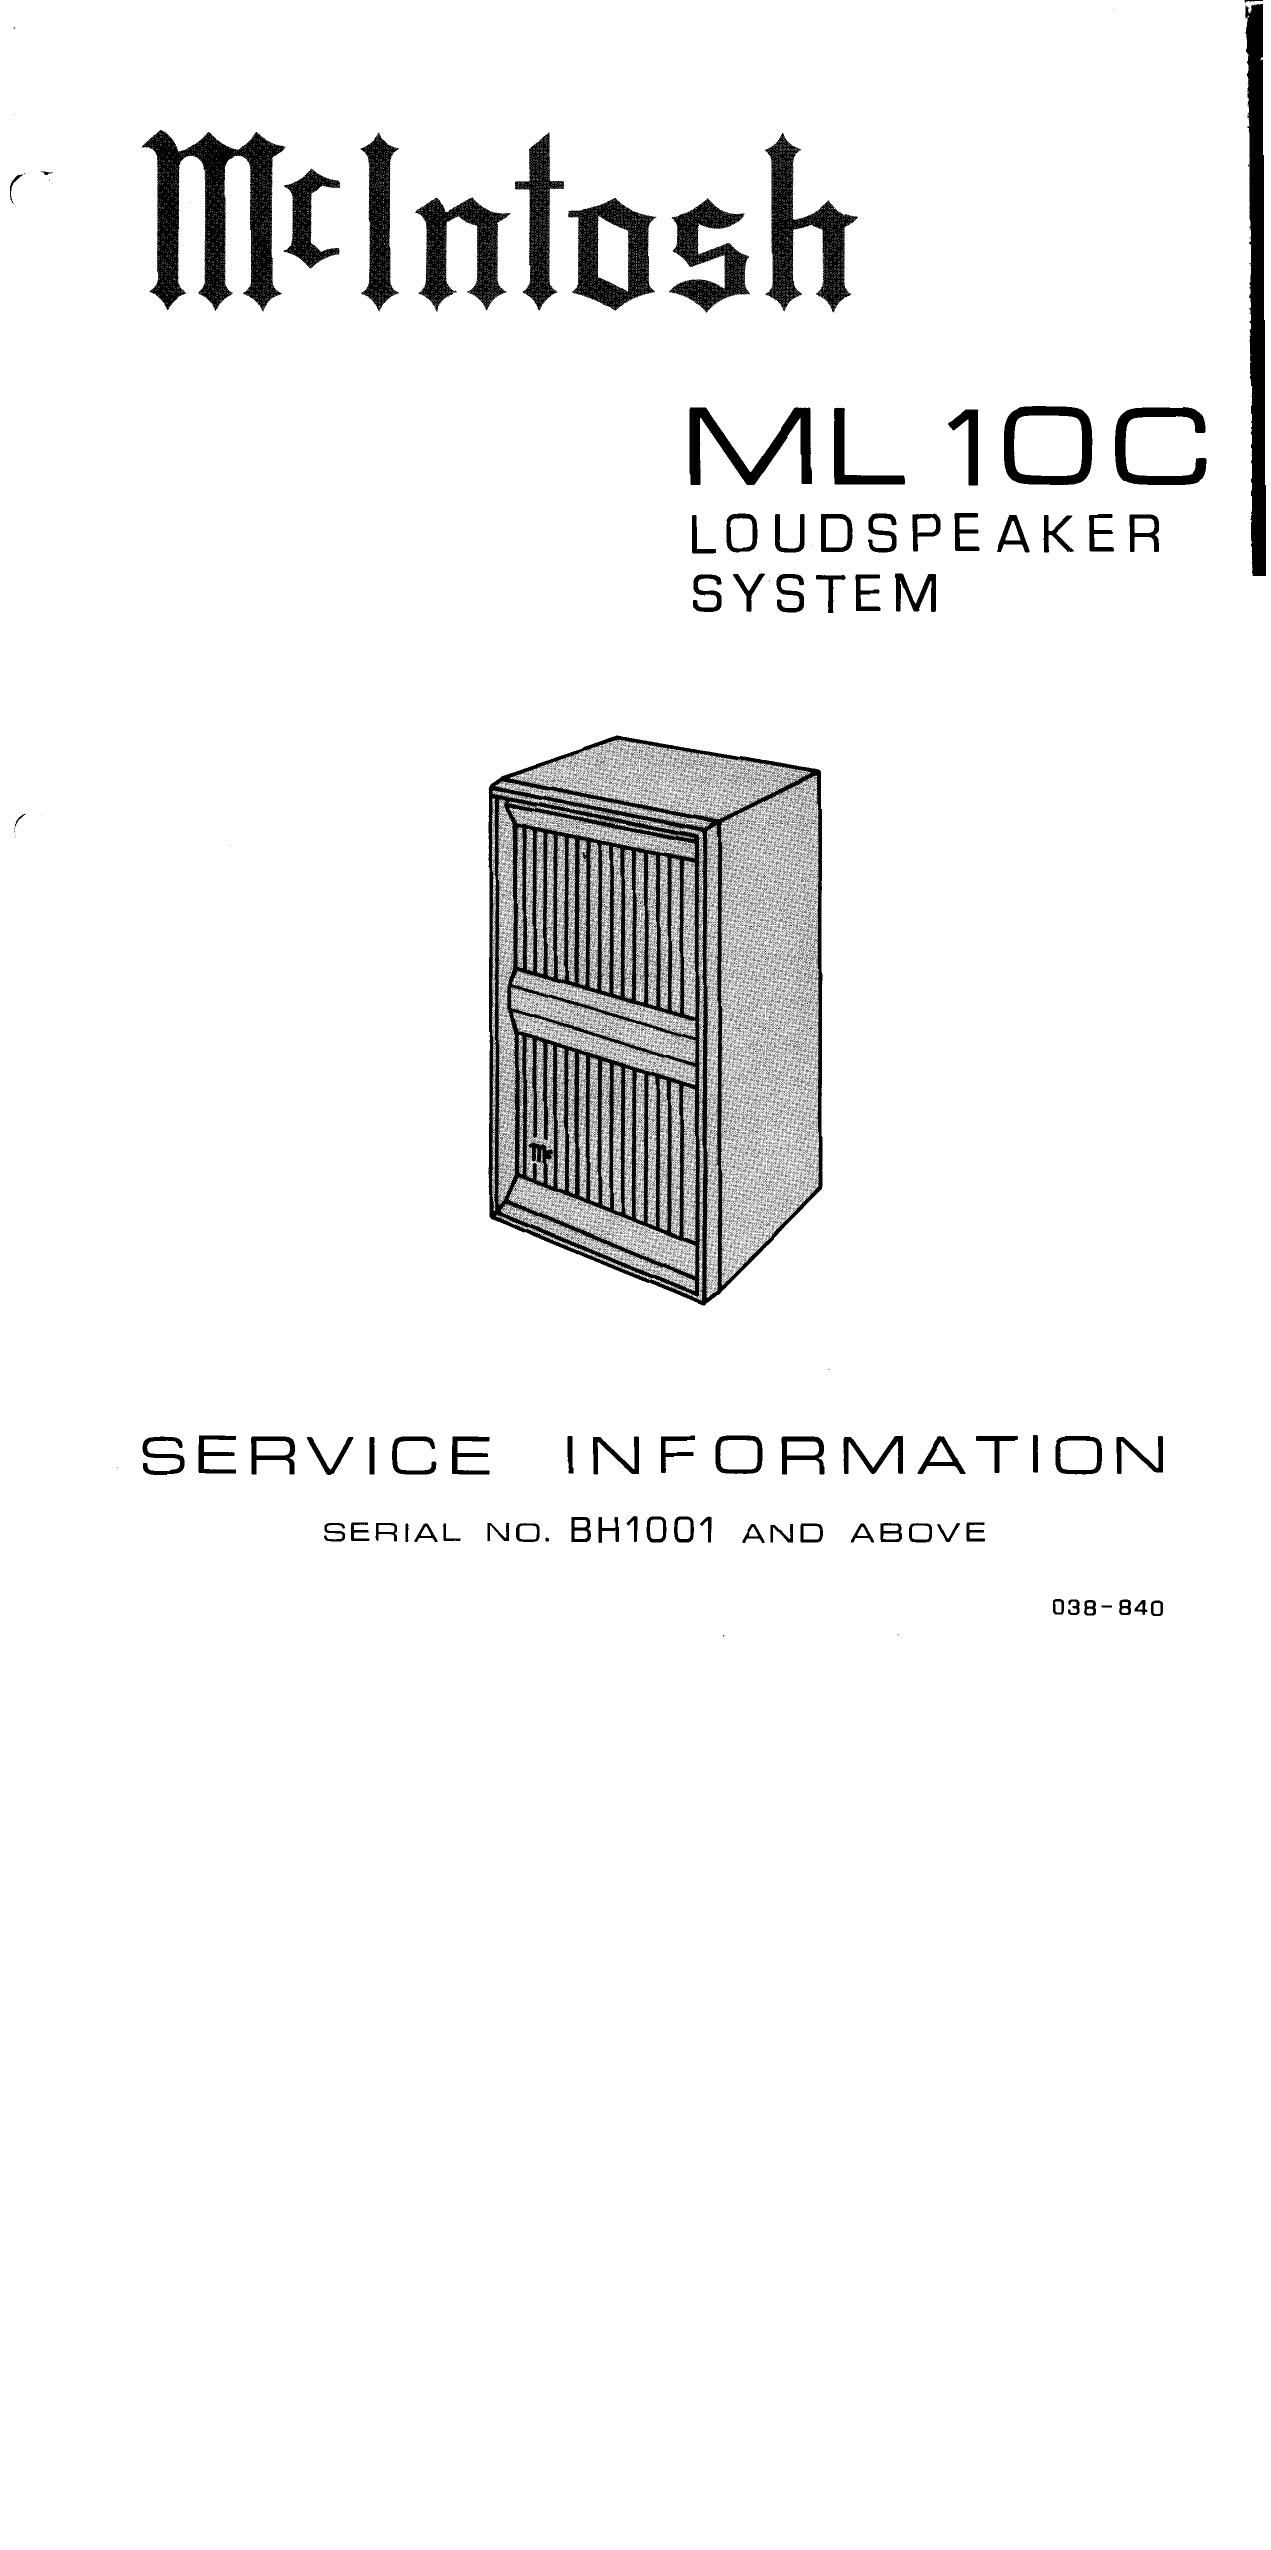 McIntosh ML 10C Service Manual